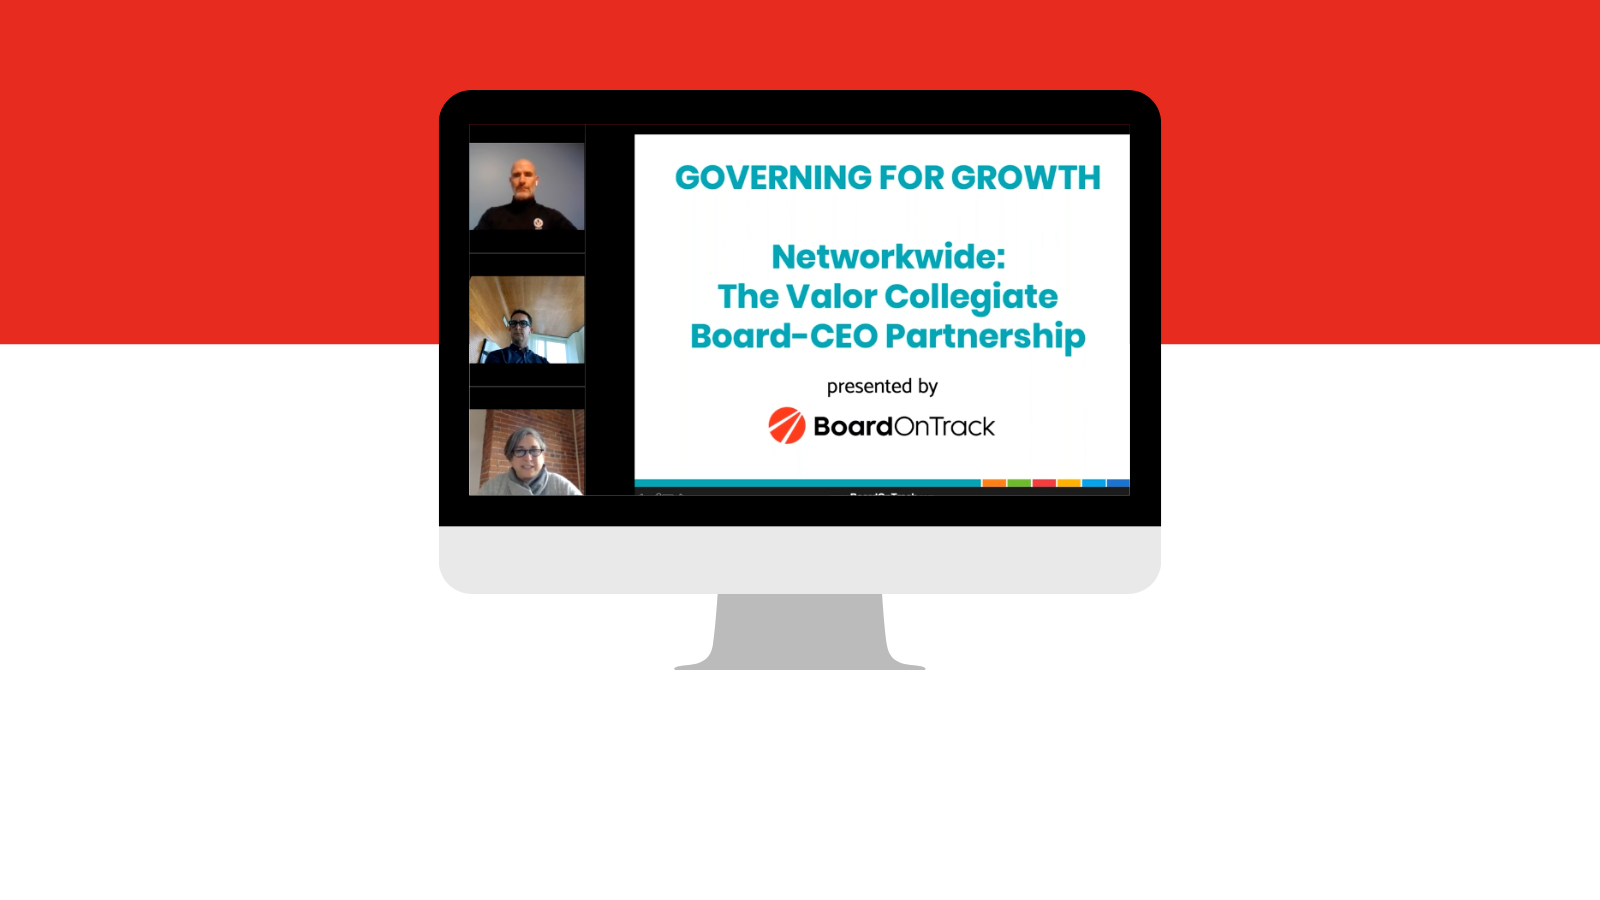 Networkwide: The Valor Collegiate Board-CEO Partnership